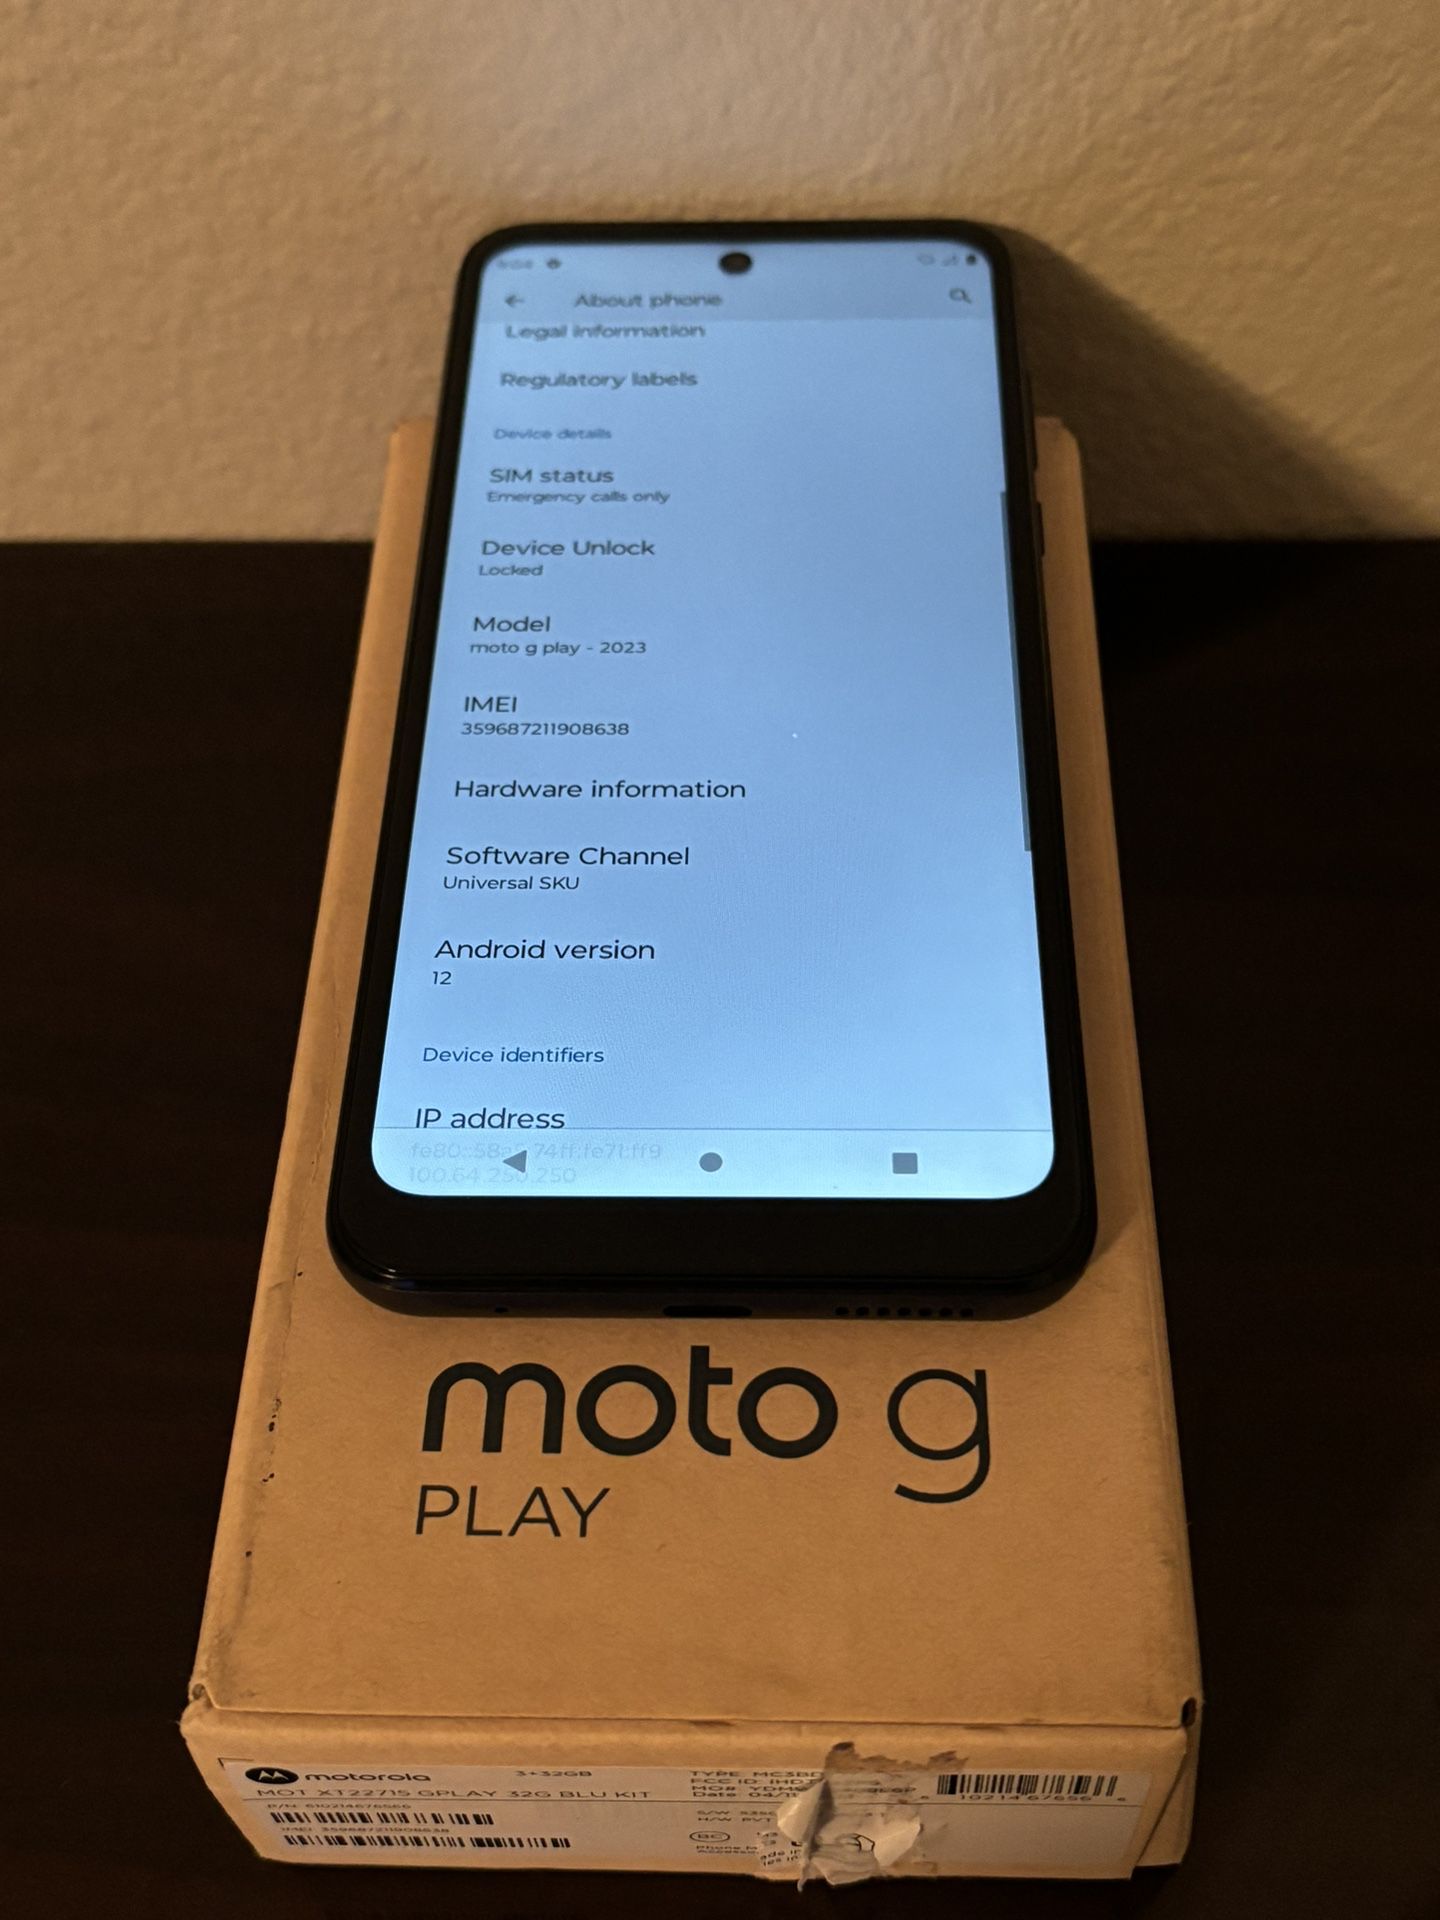 Motorola G Play 32gb Blue Kit Locked